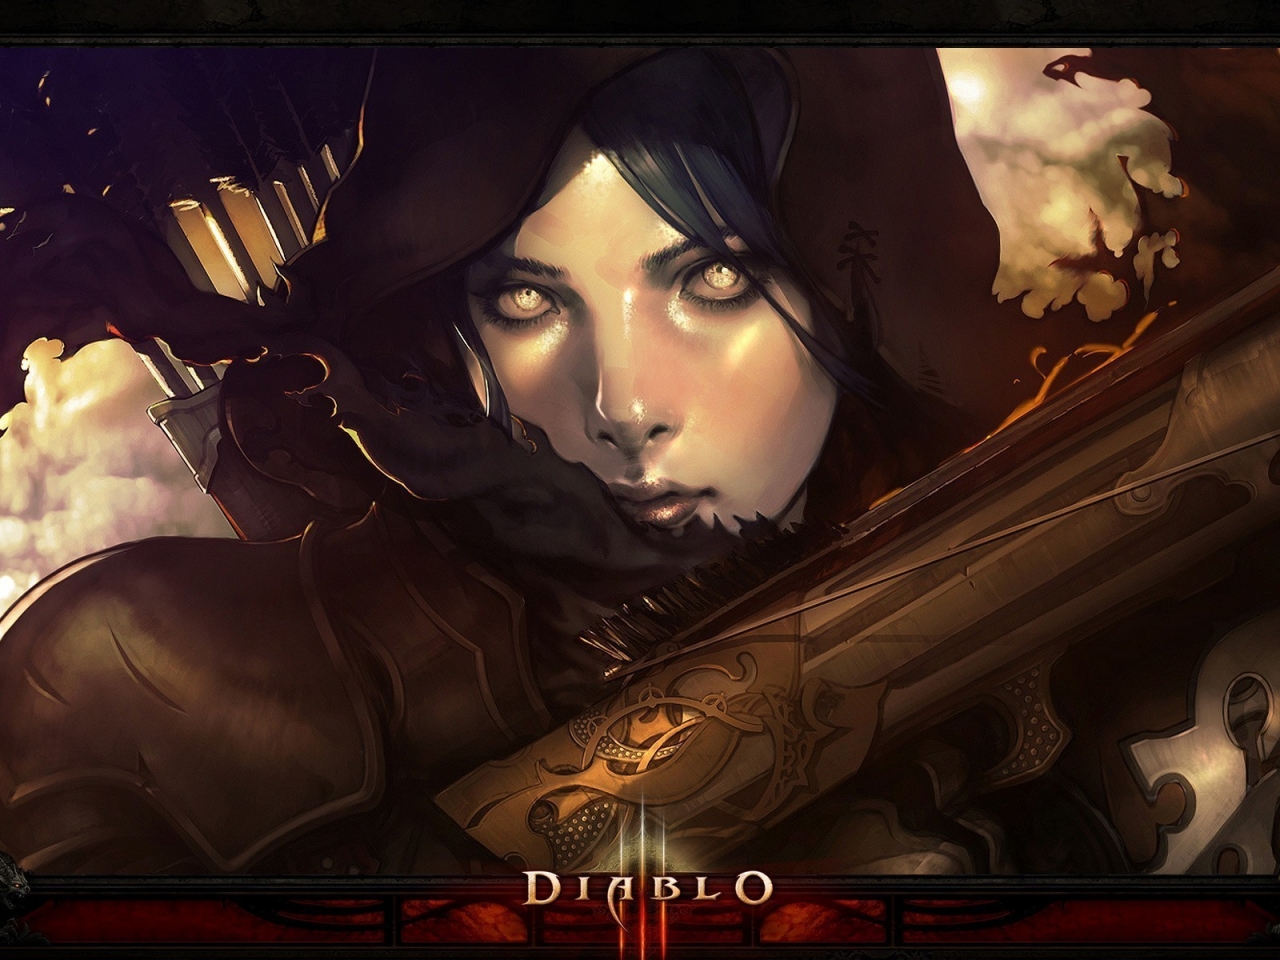 Diablo III Character for 1280 x 960 resolution